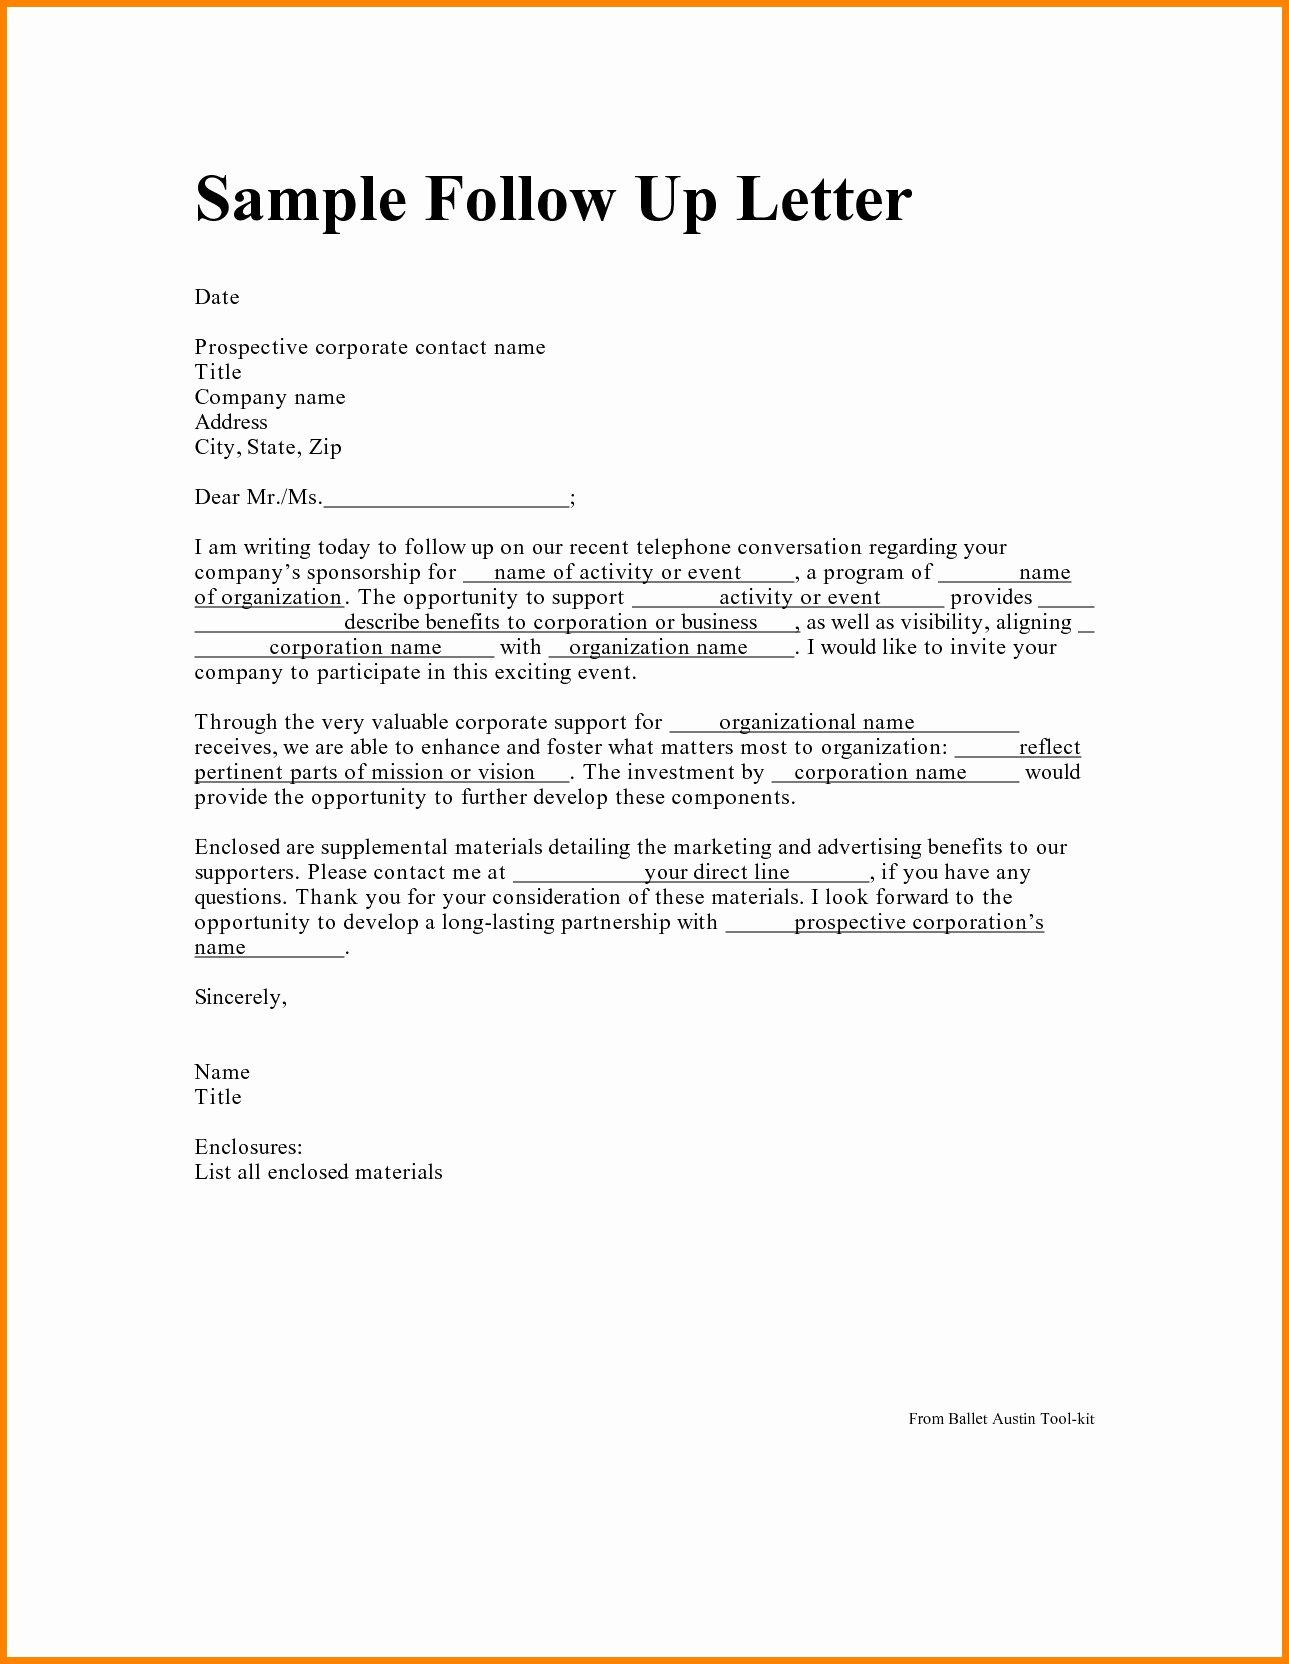 Patient Follow Up Letter Templates Best Of Follow Up Letter